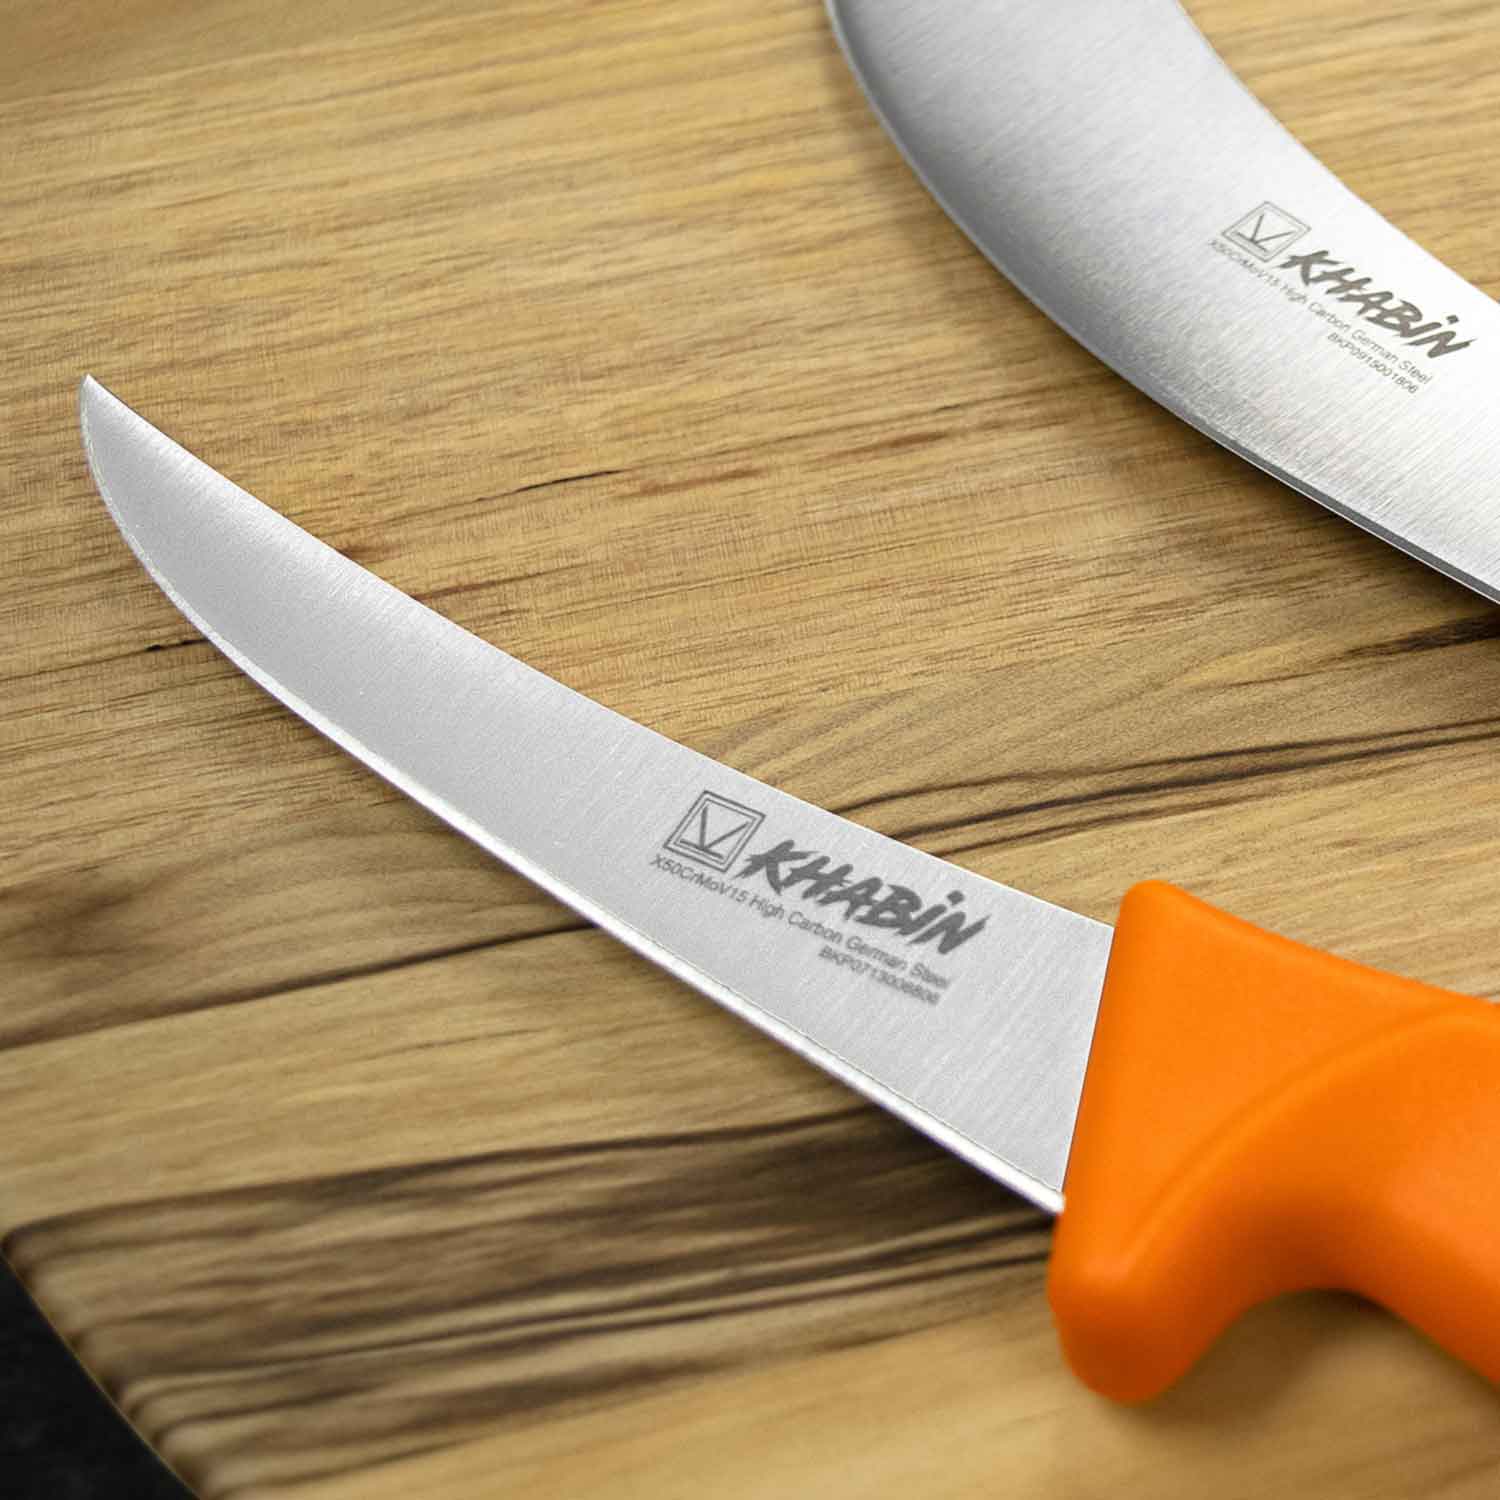 Khabin Khabin Knife Boning Narrow and Curved Orange - Each Kitchen Equipment  